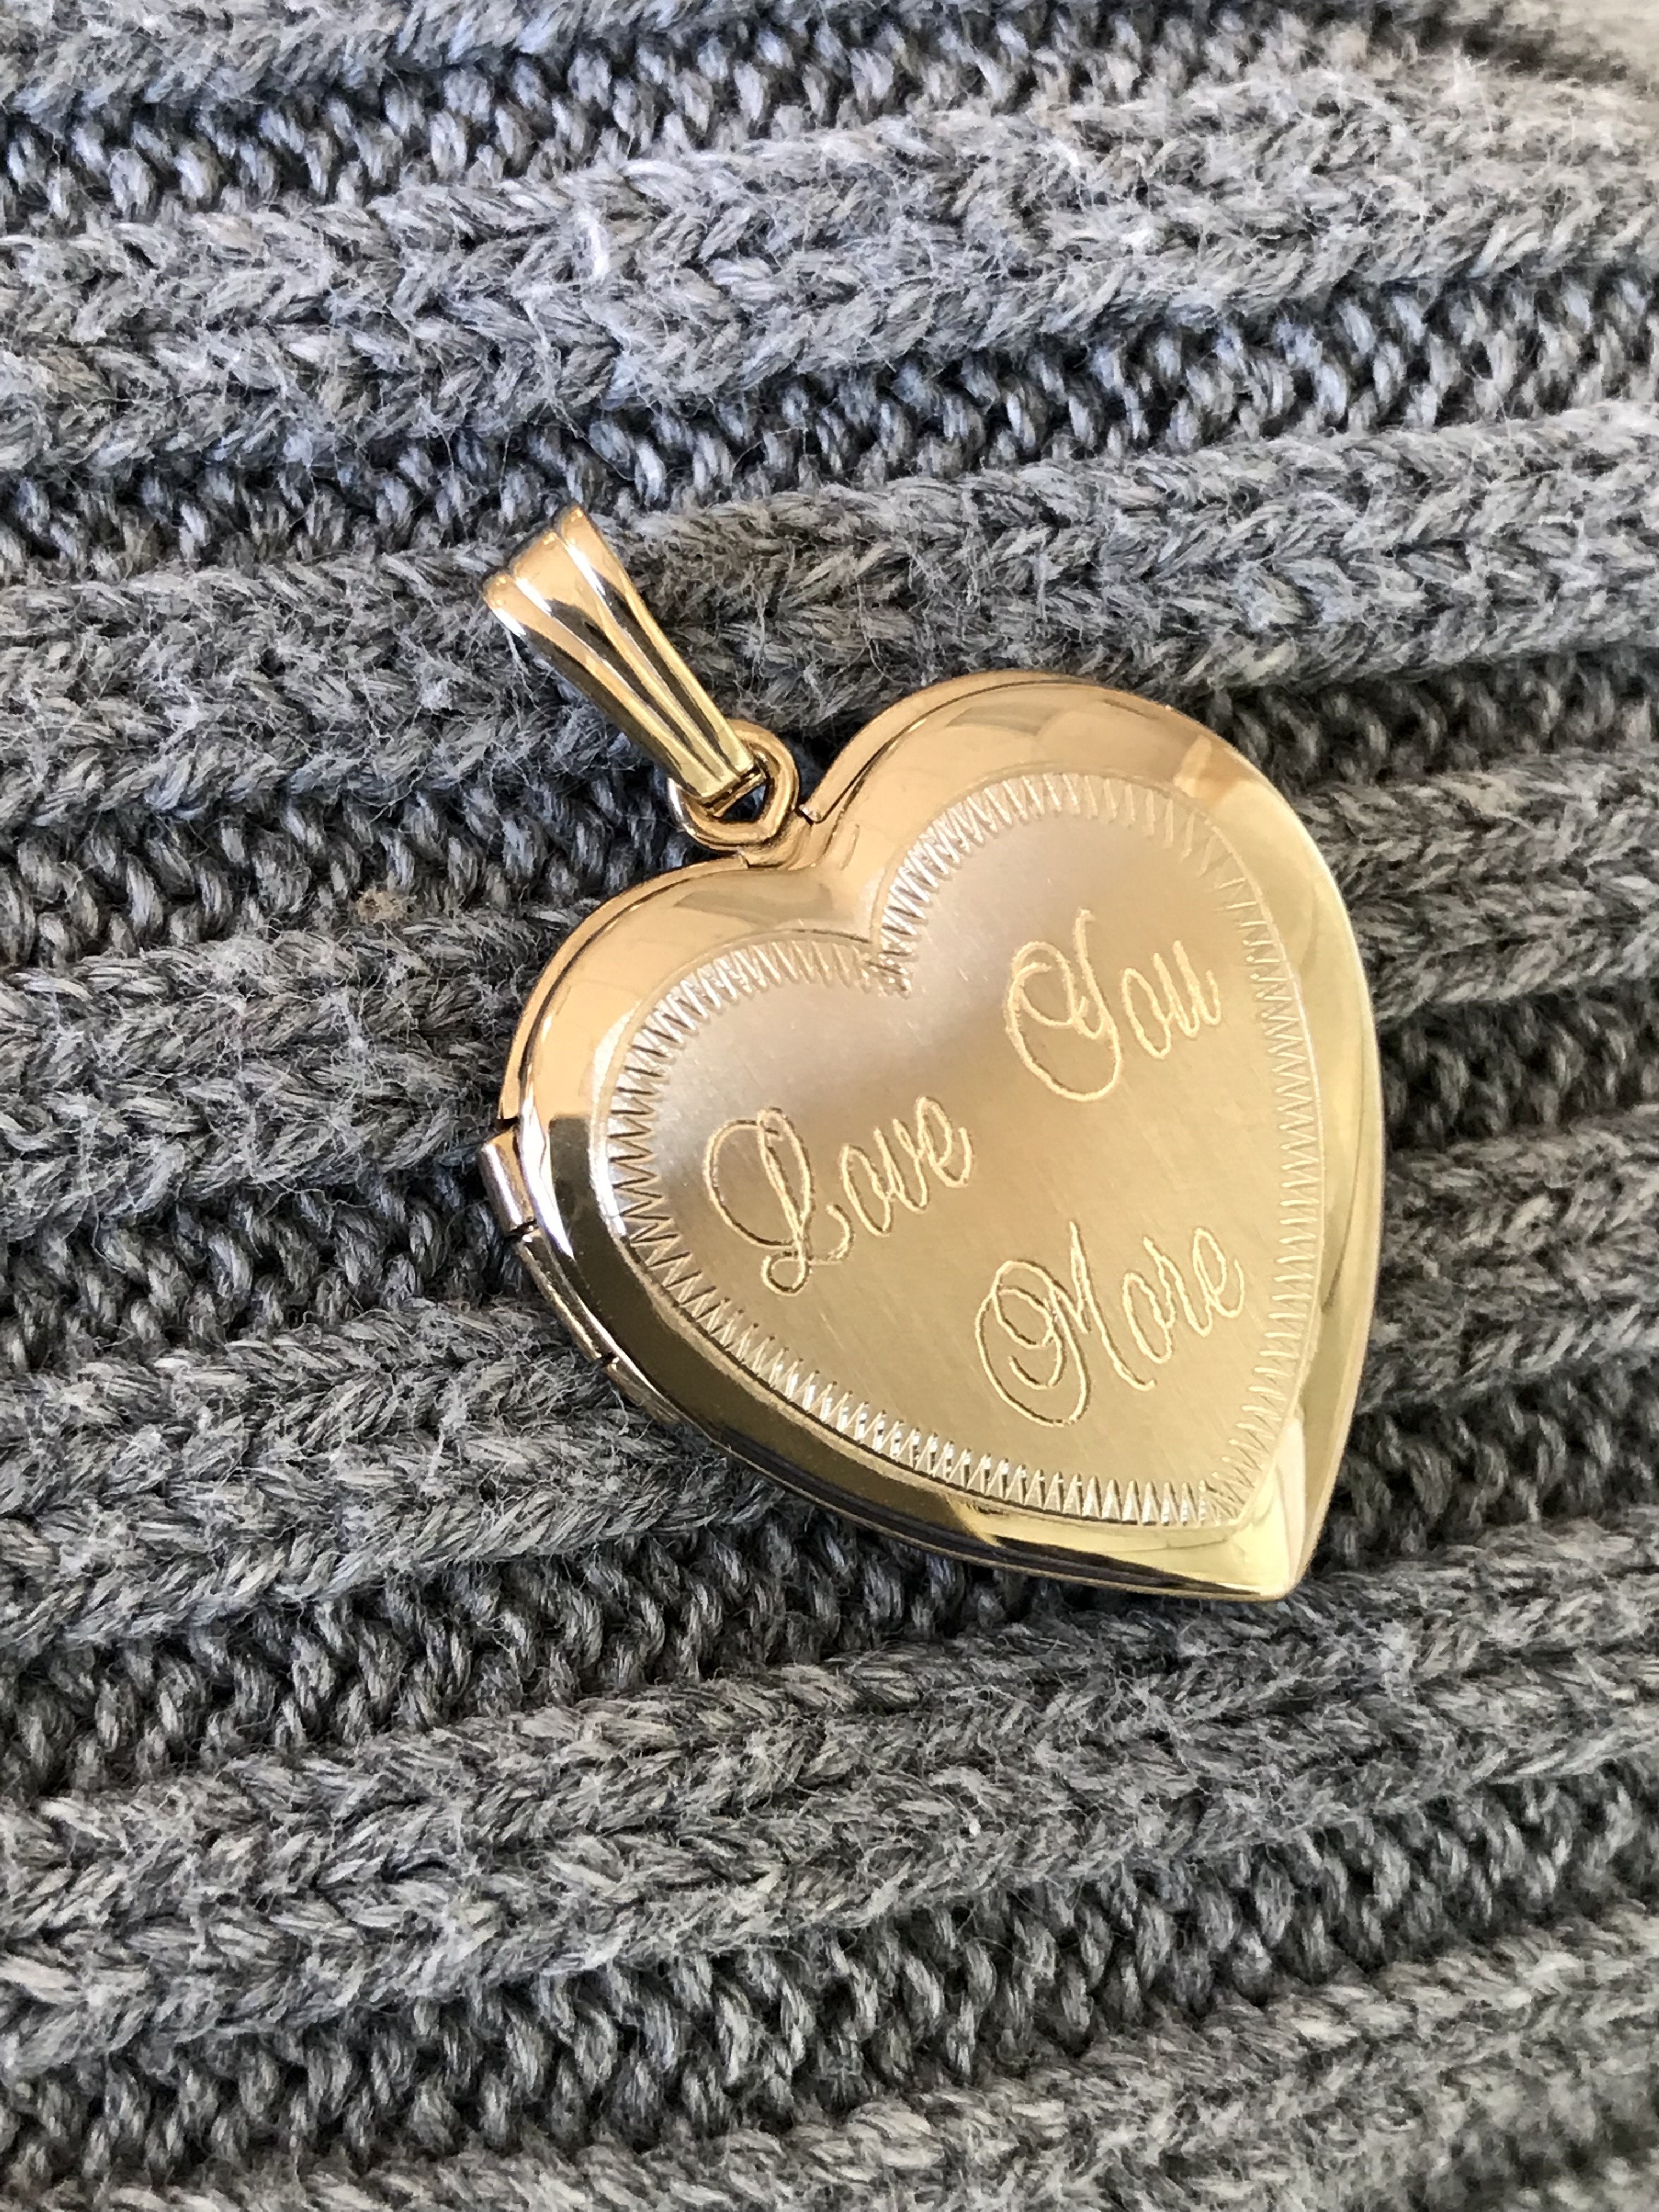 14k Yellow Gold 19mm Heart Embossed Locket Pendant Charm Engraved Personalized Monogram